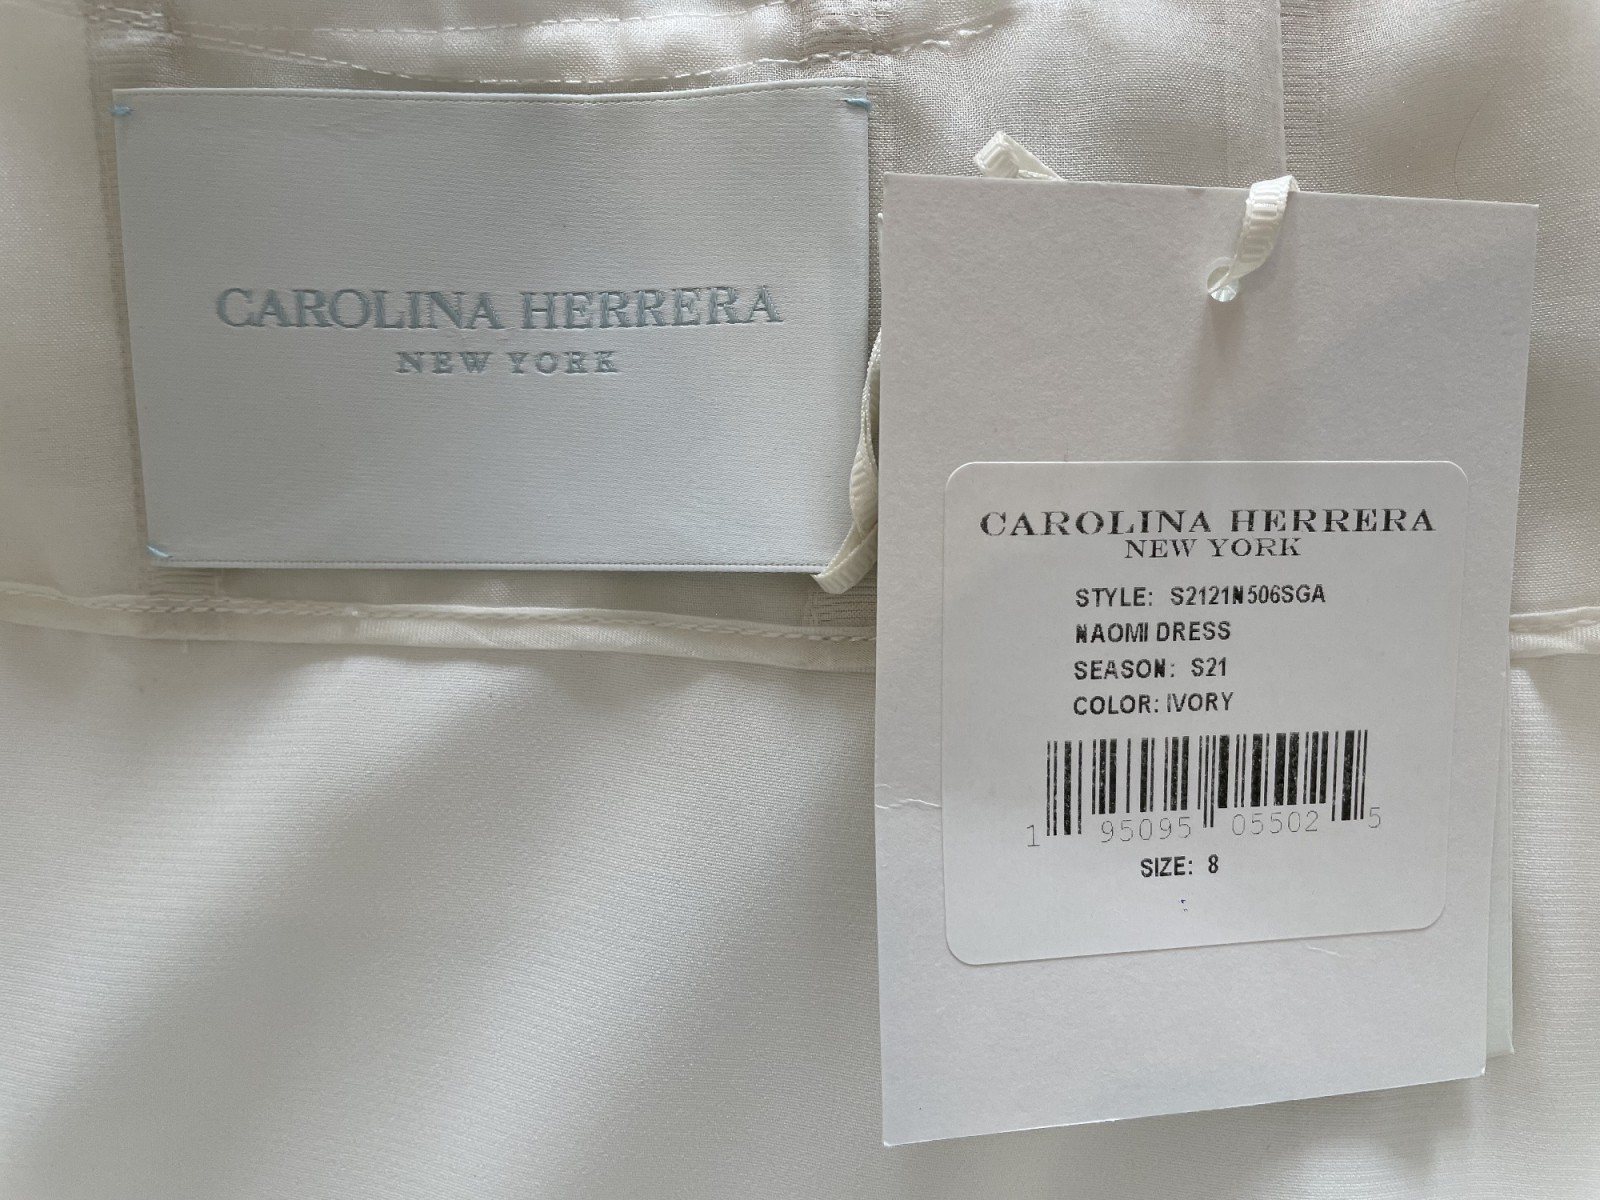 Carolina Herrera S2121N506SGA New Wedding Dress Save 27% - Stillwhite